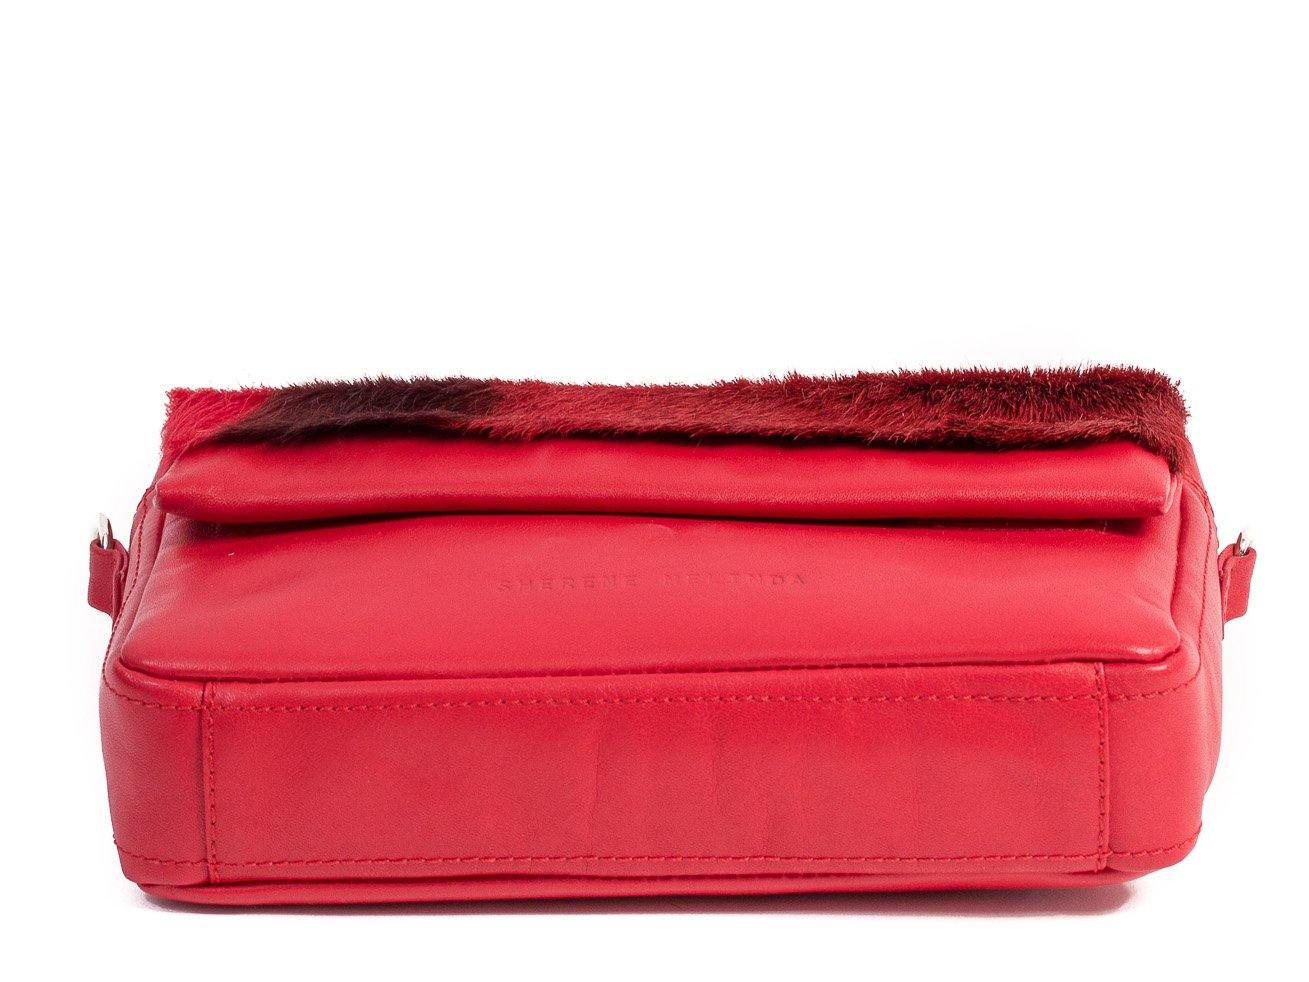 sherene melinda springbok hair-on-hide red leather shoulder bag Stripe bottom